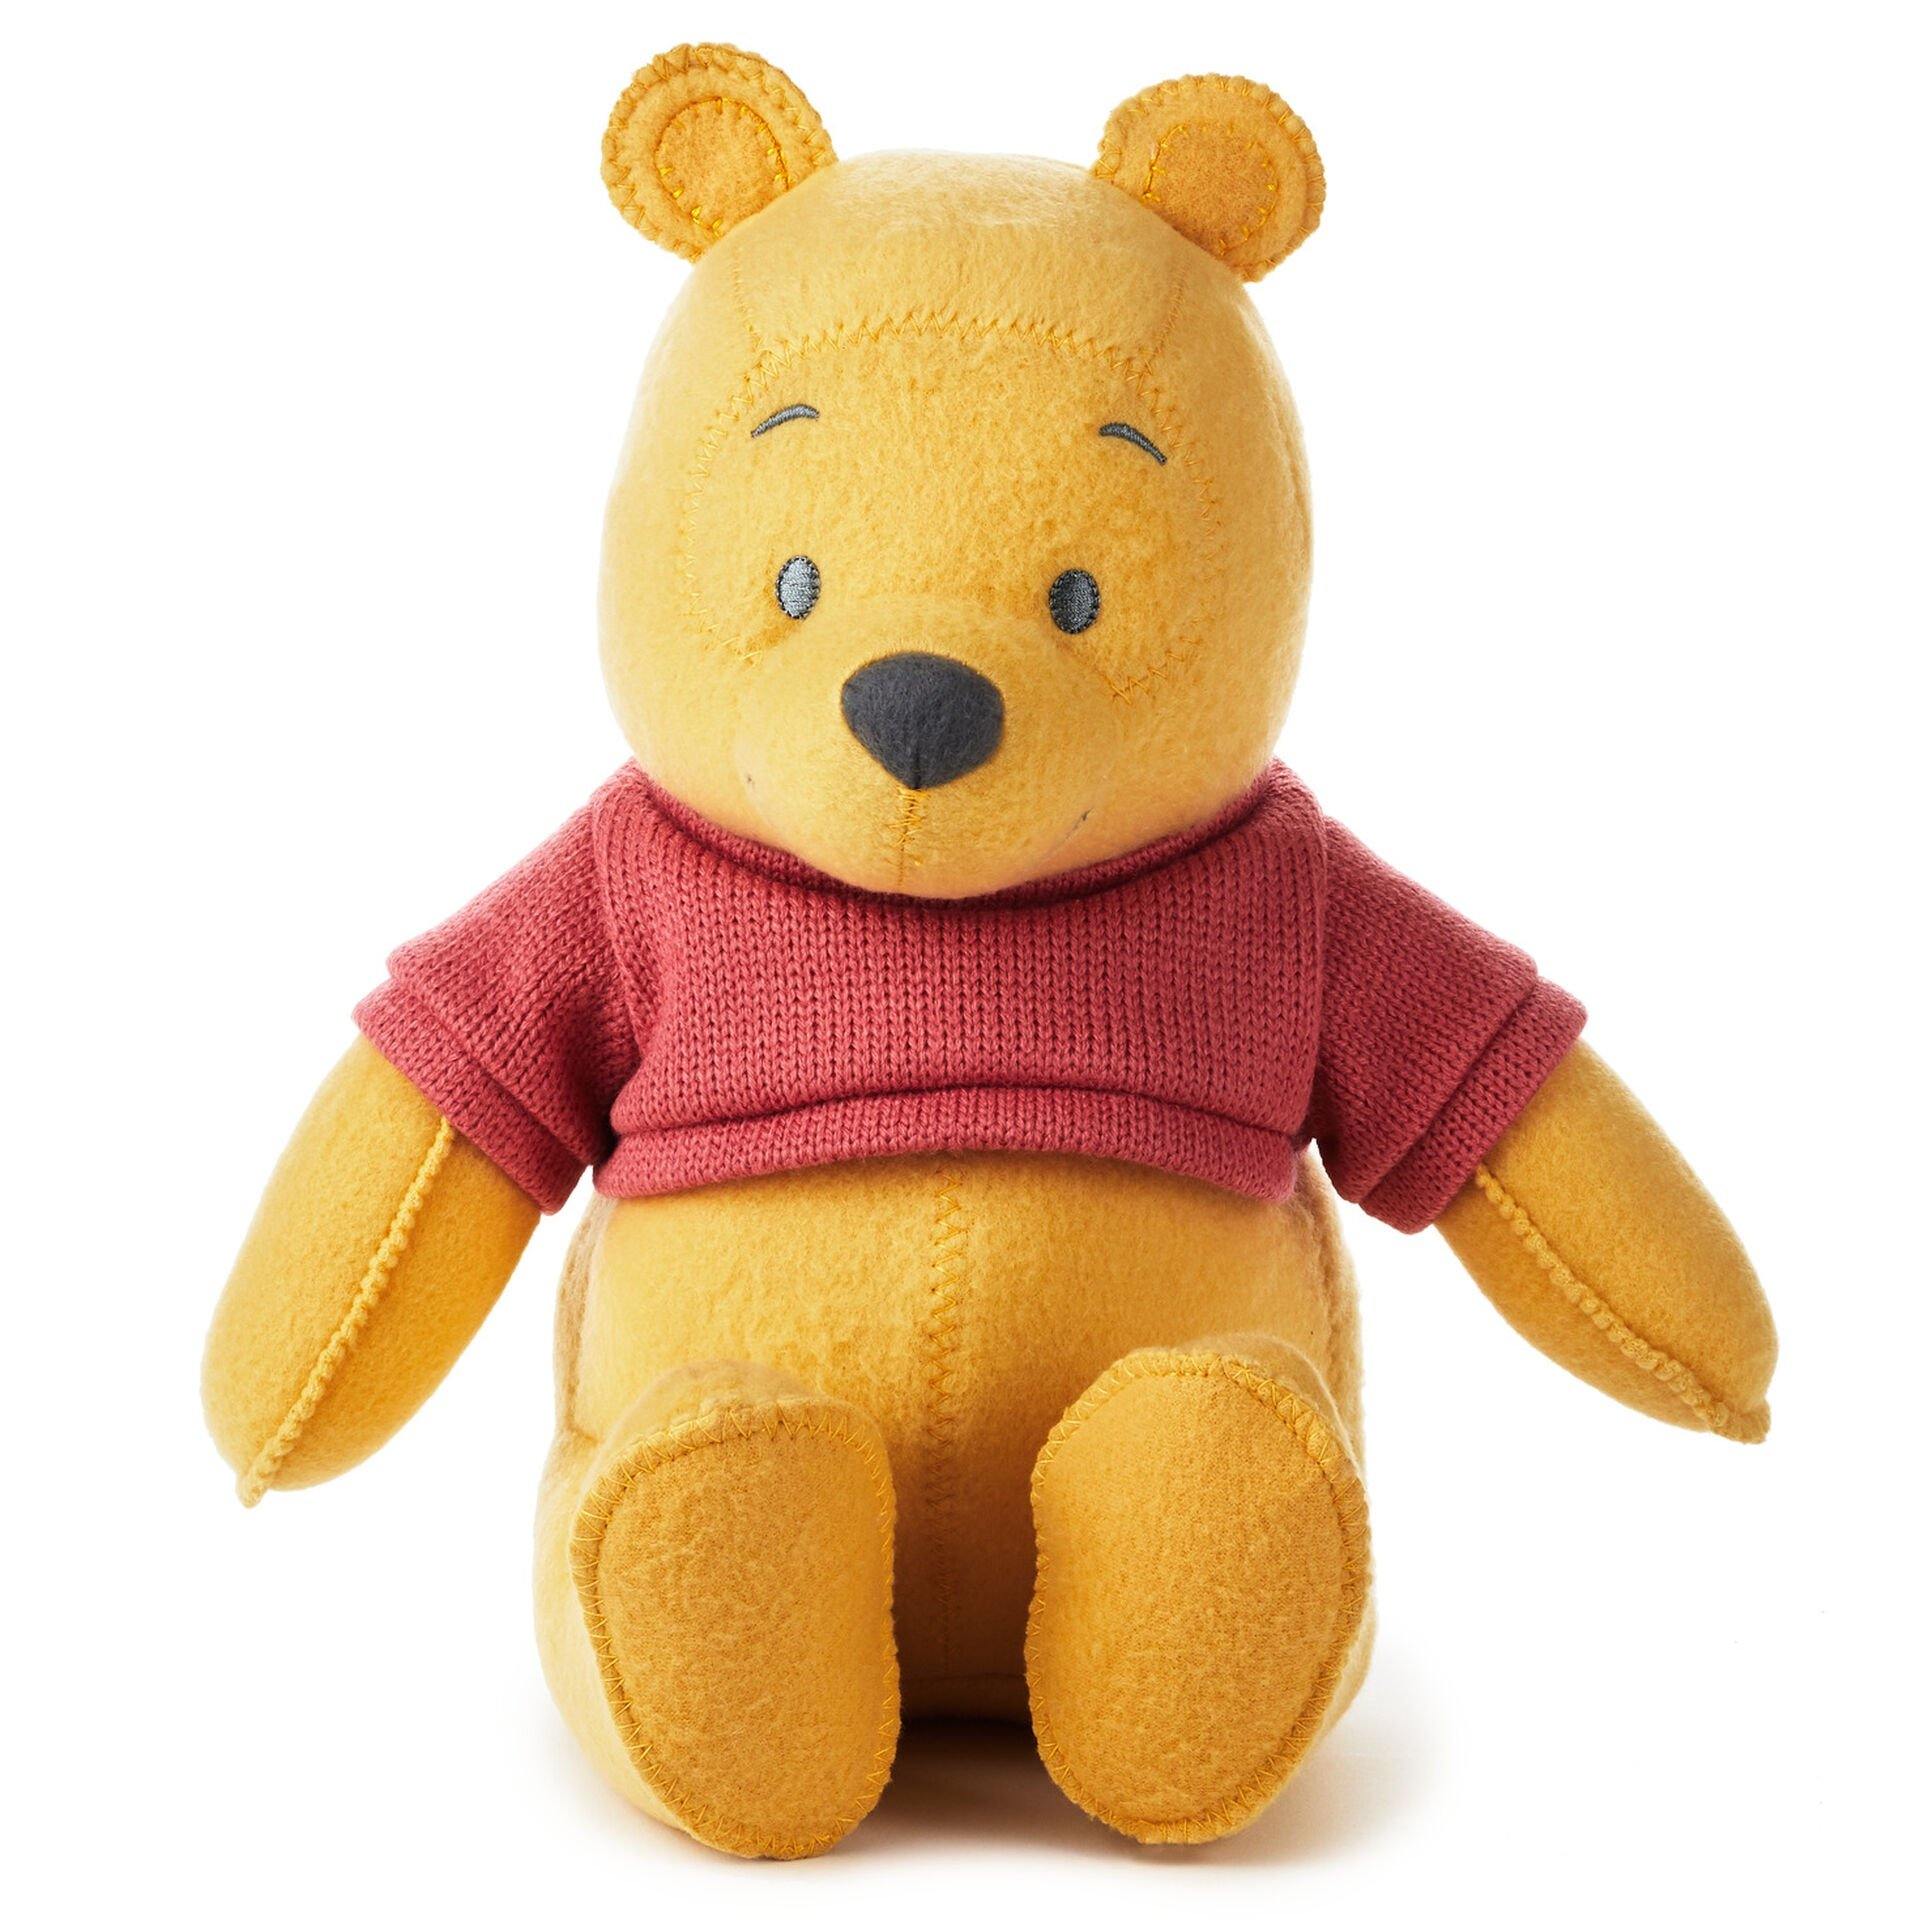 Disney Winnie the Pooh Soft Felt Stuffed Animal, 11"